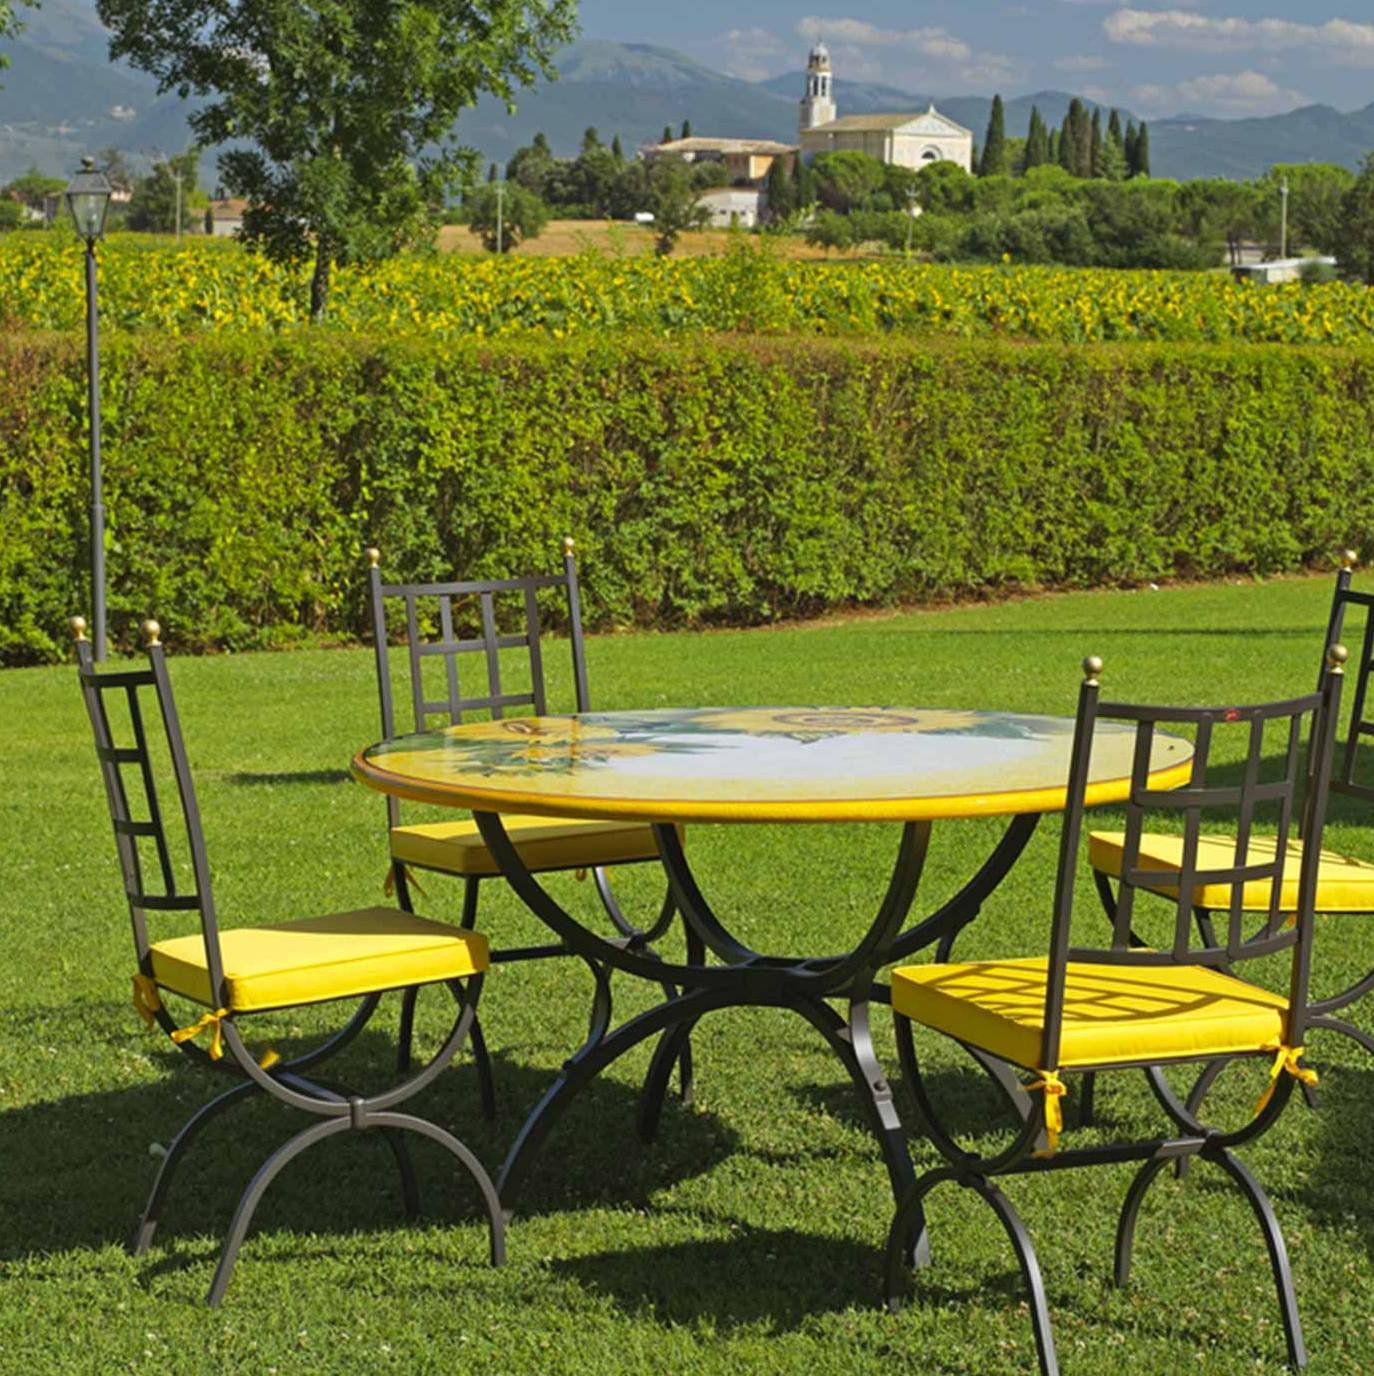 CERAMIC STONE TABLE + IRON BASE: SPELLO Design - Hand Painted in Deruta, Italy. - Artistica.com